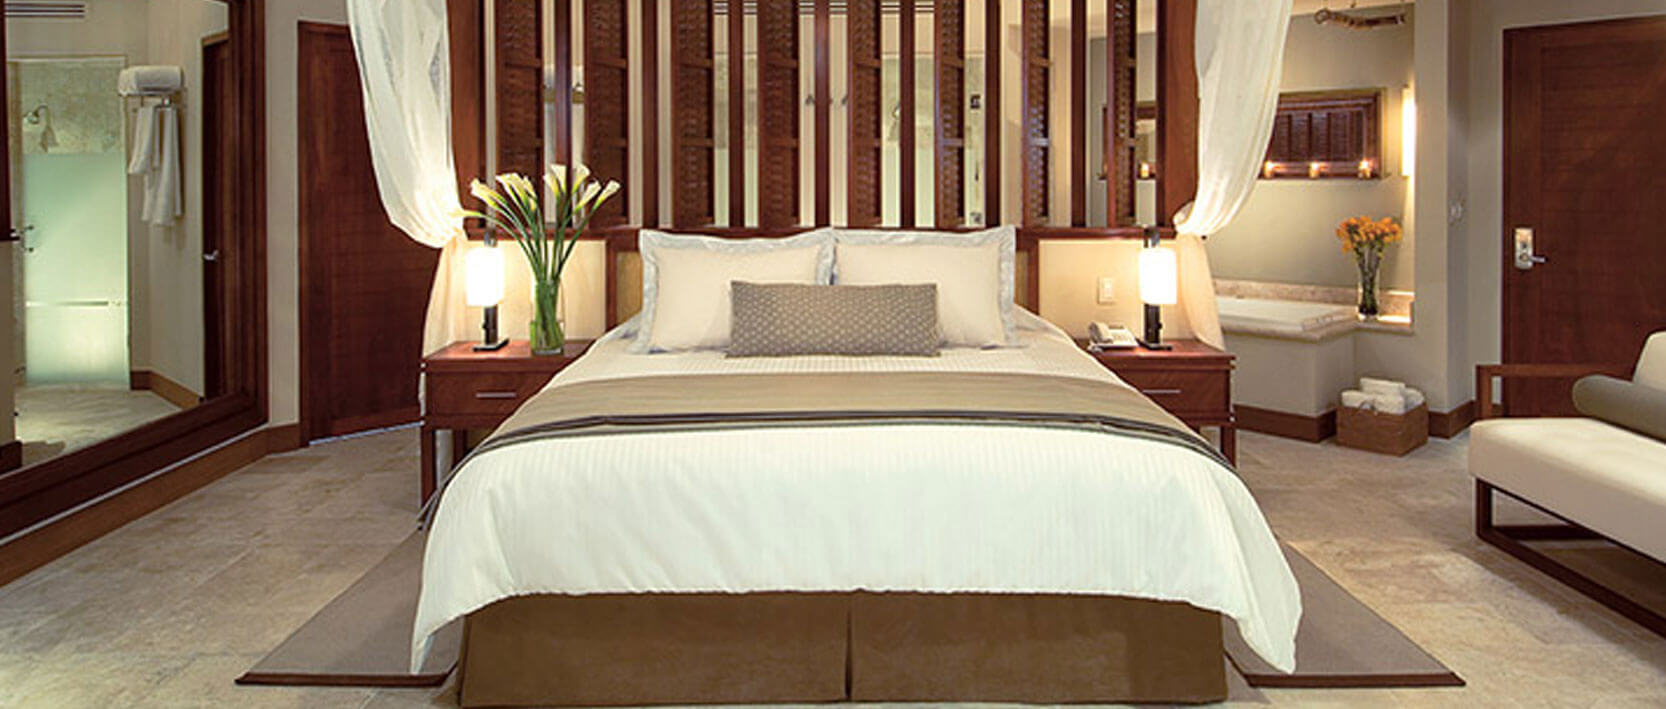 Dreams Riviera Cancun Resort Accommodations - Premium Deluxe Ocean View